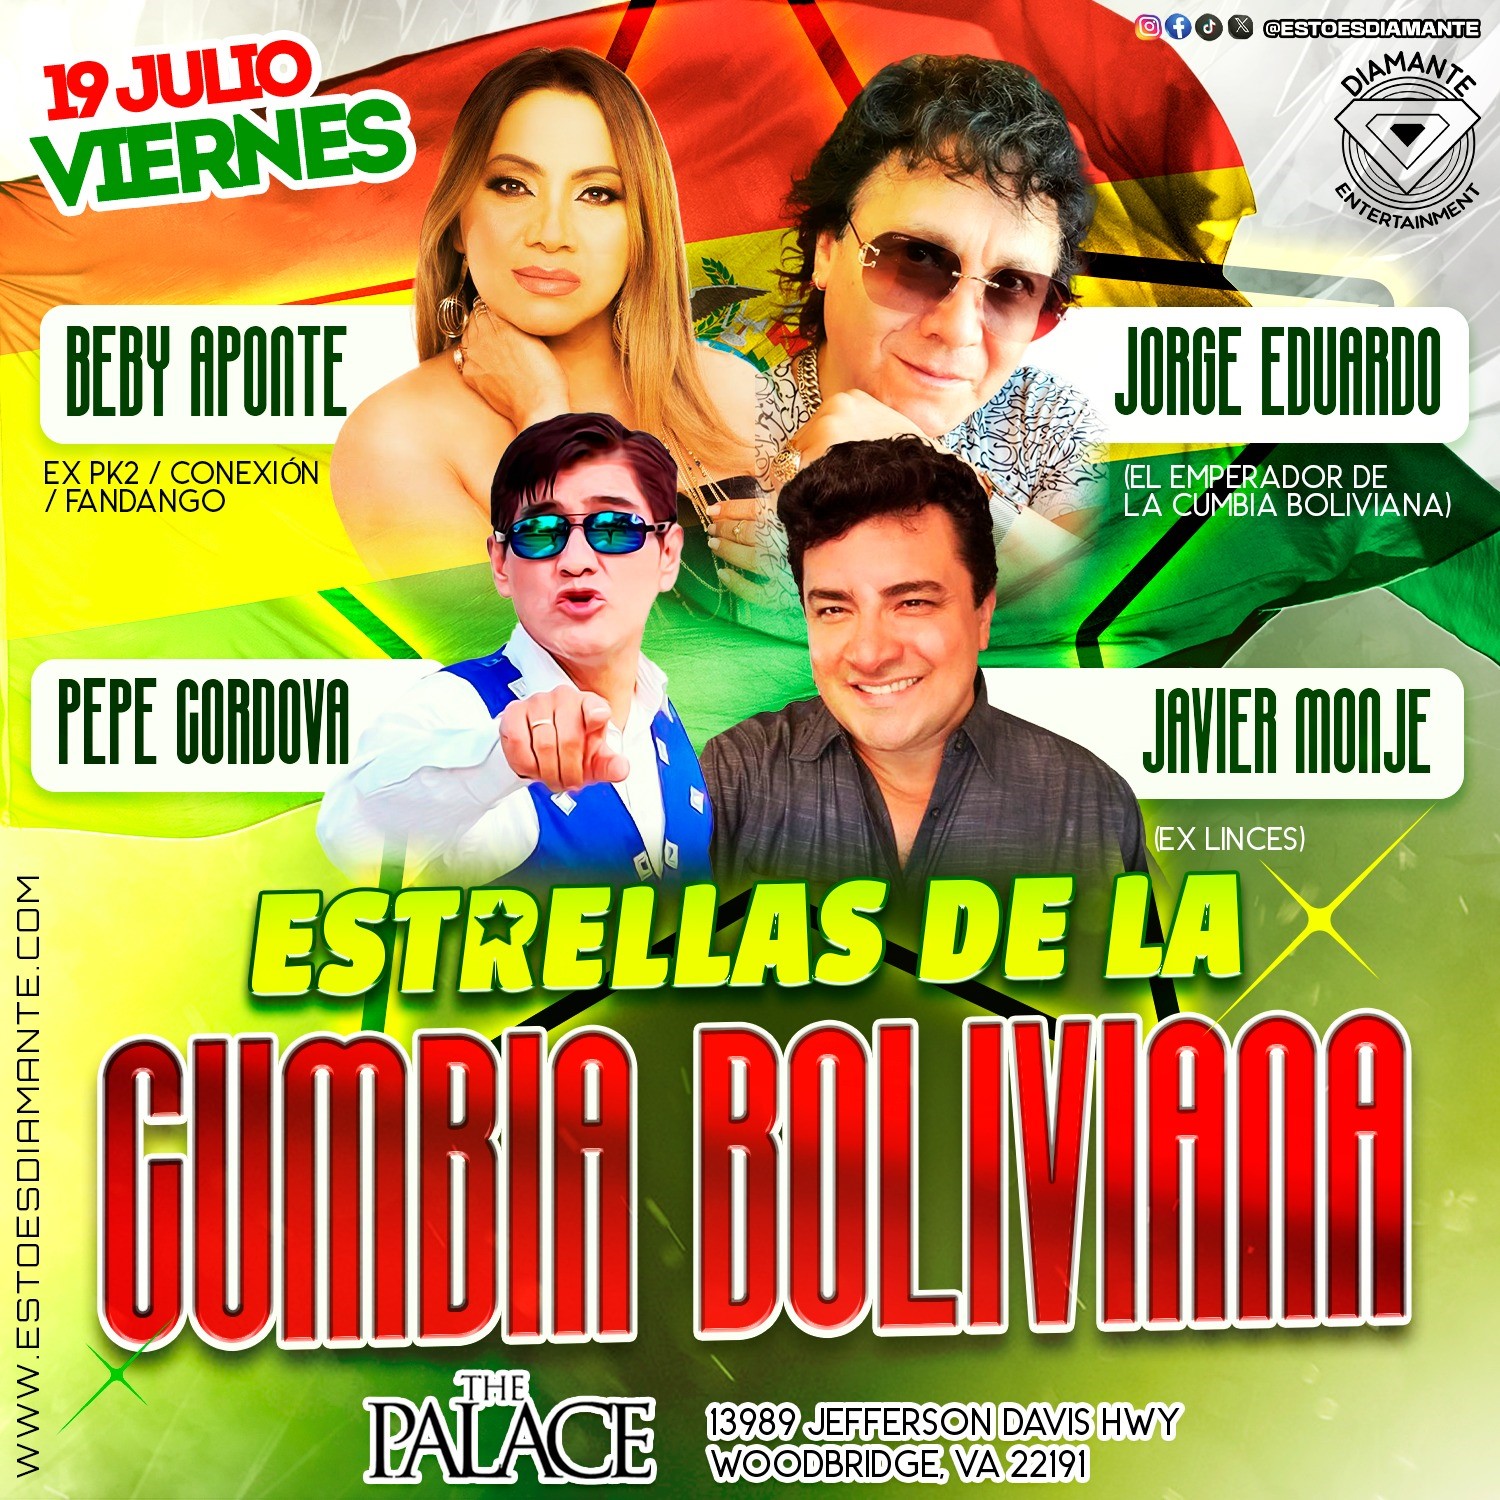 Estrellas De La Cumbia Boliviana  on Jul 19, 21:00@THE PALACE - Pick a seat, Buy tickets and Get information on Diamante Entertainment 